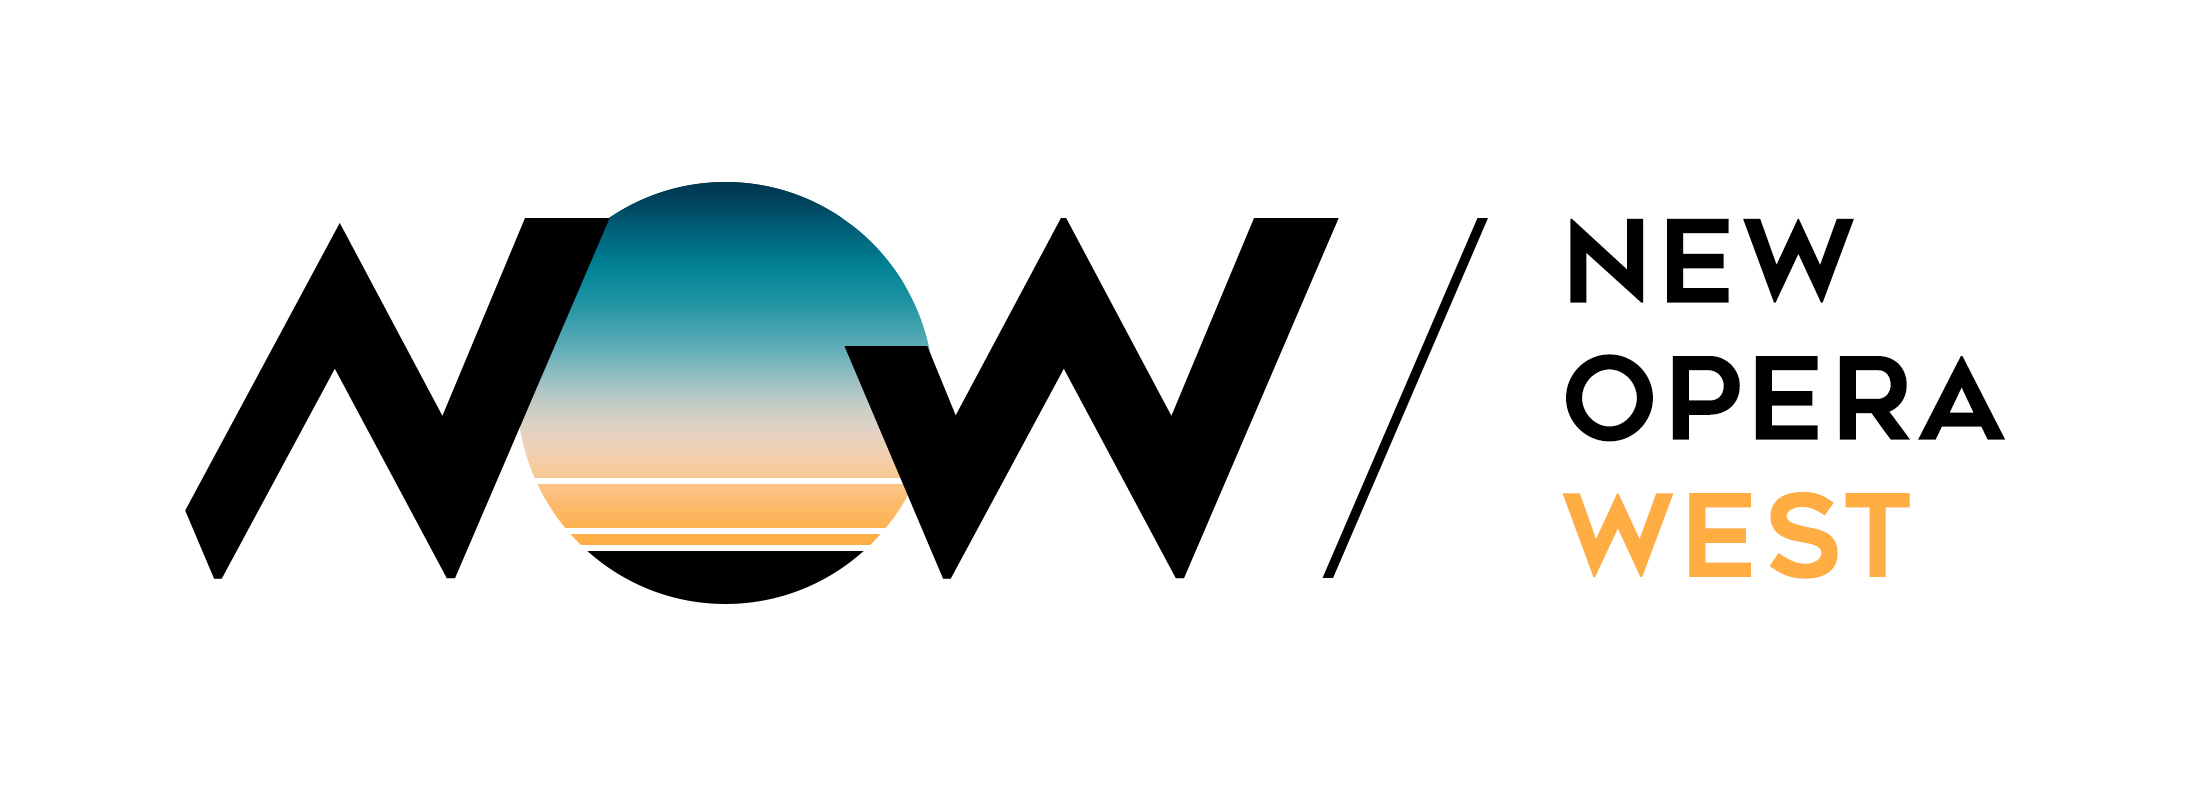 New Opera West logo